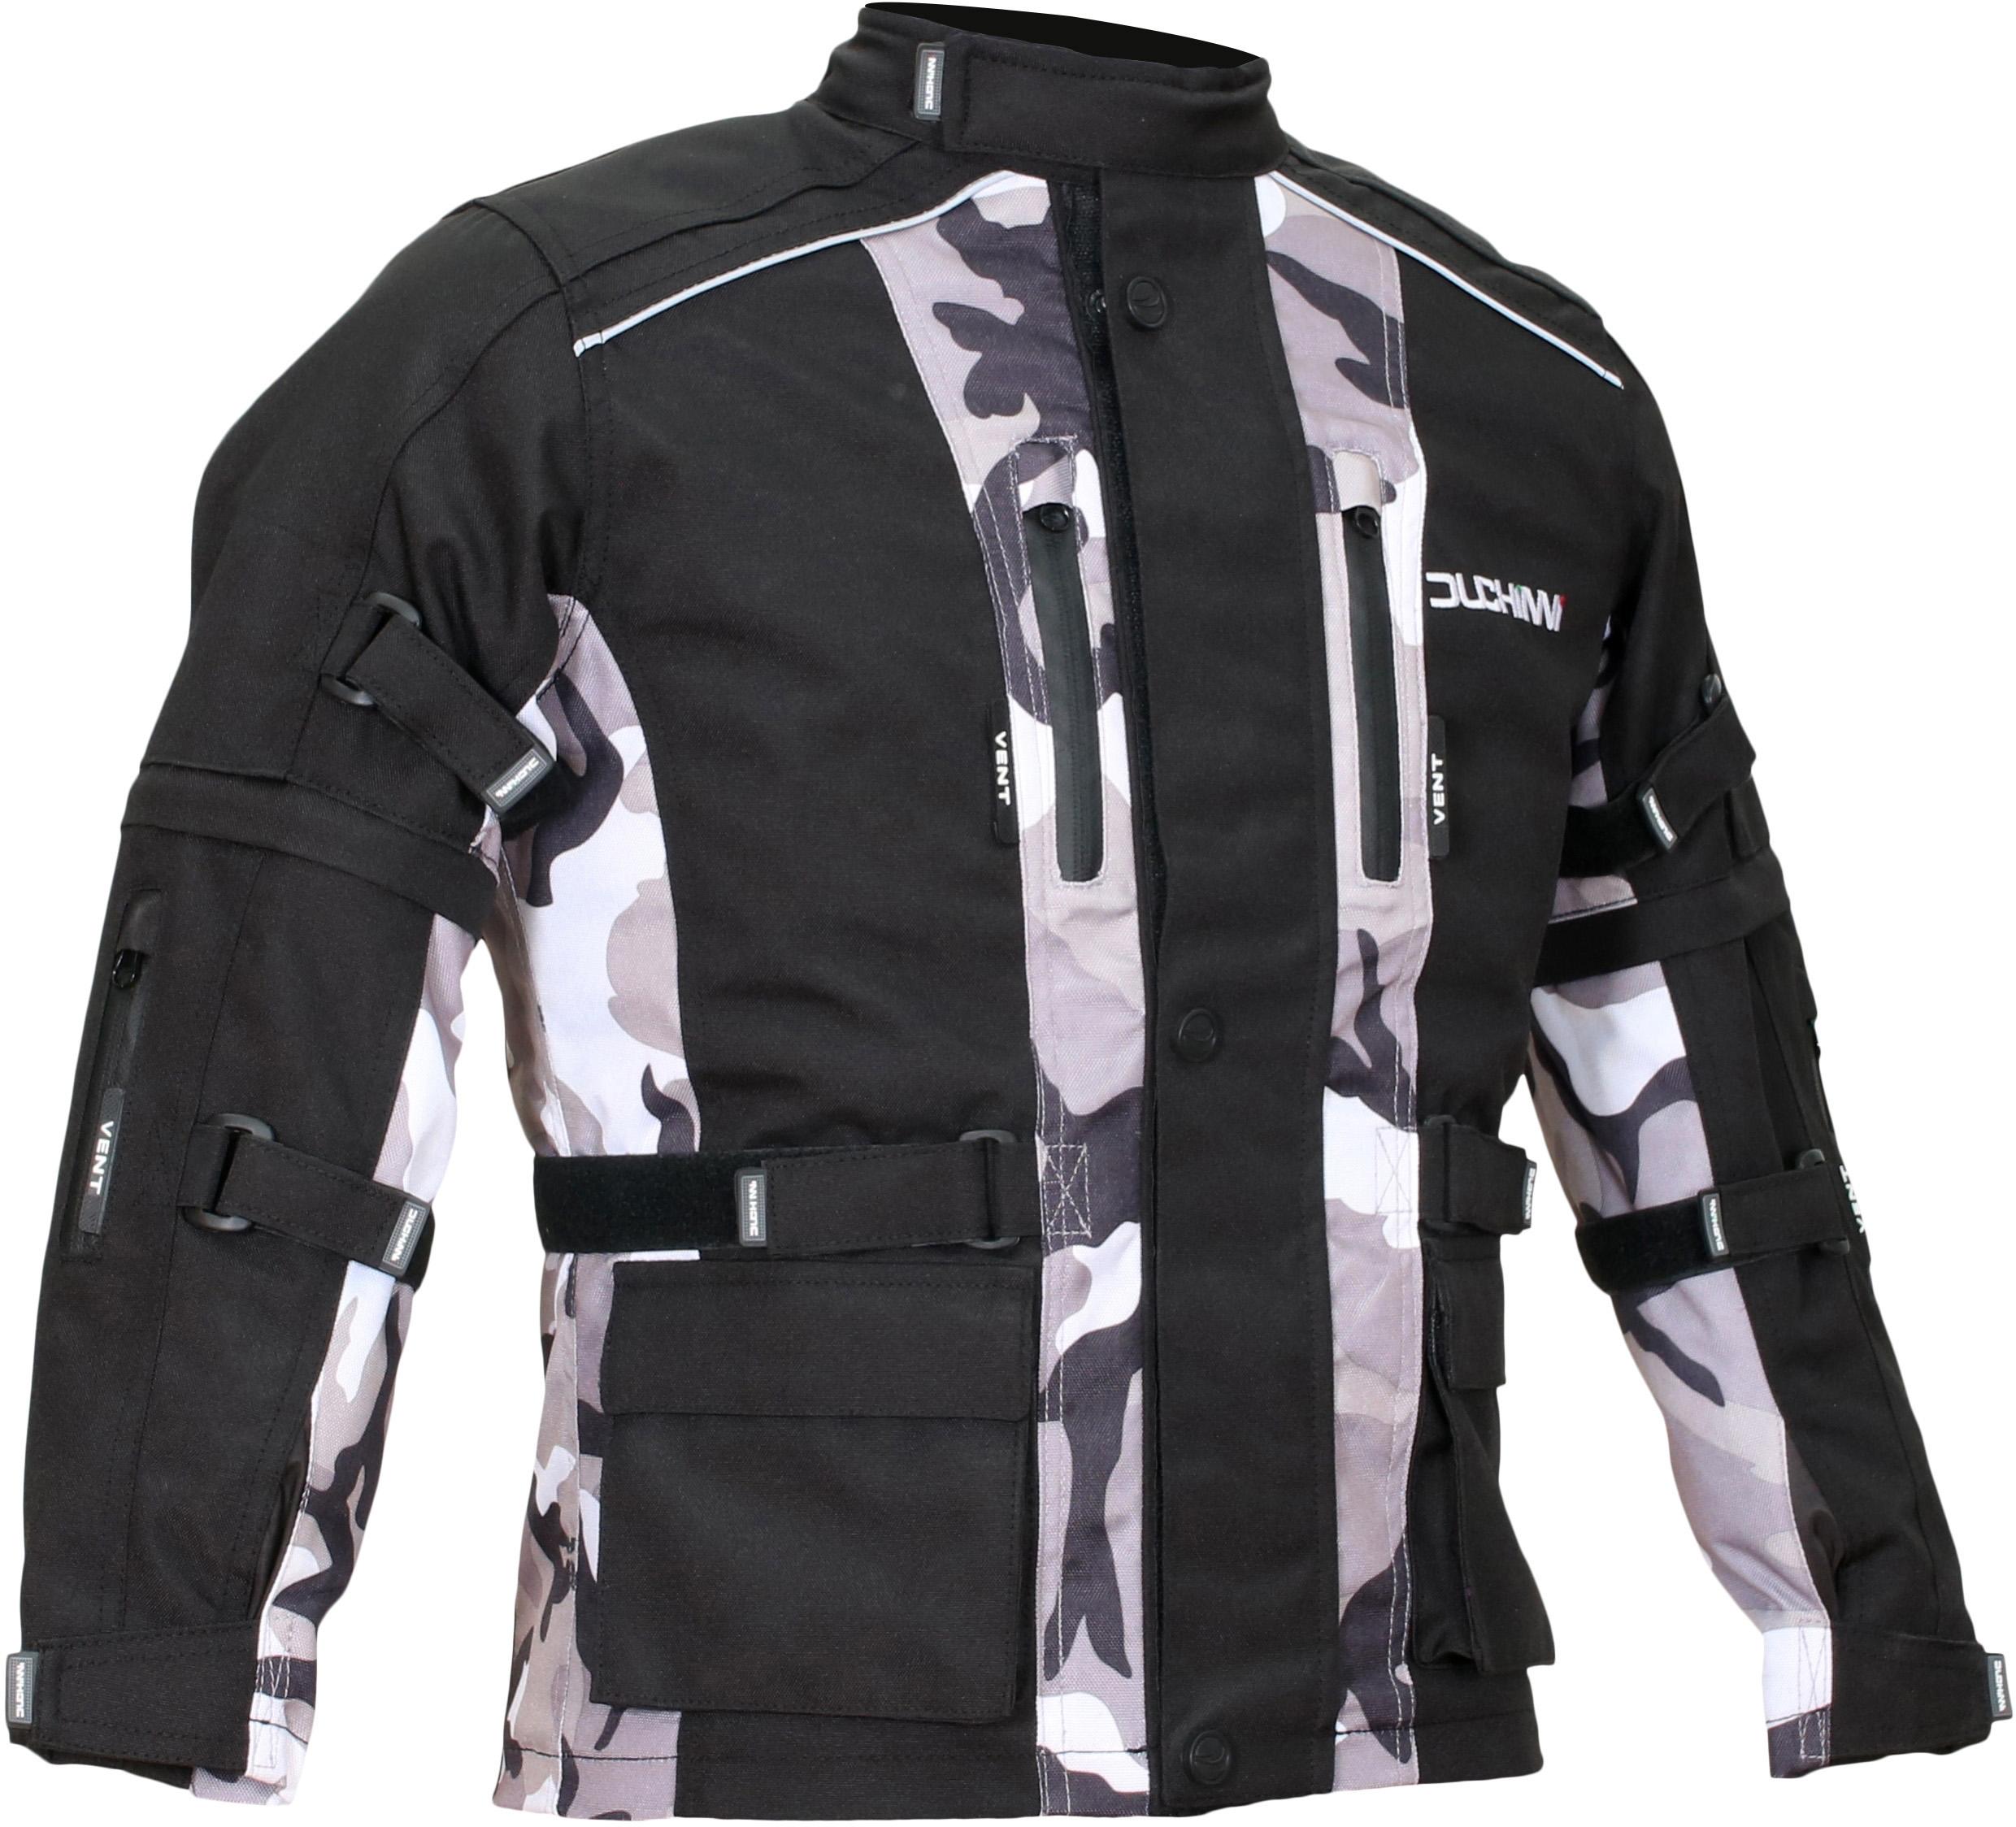 Duchinni Jago Youth Motorcycle Jacket - Black And Camo, Xl